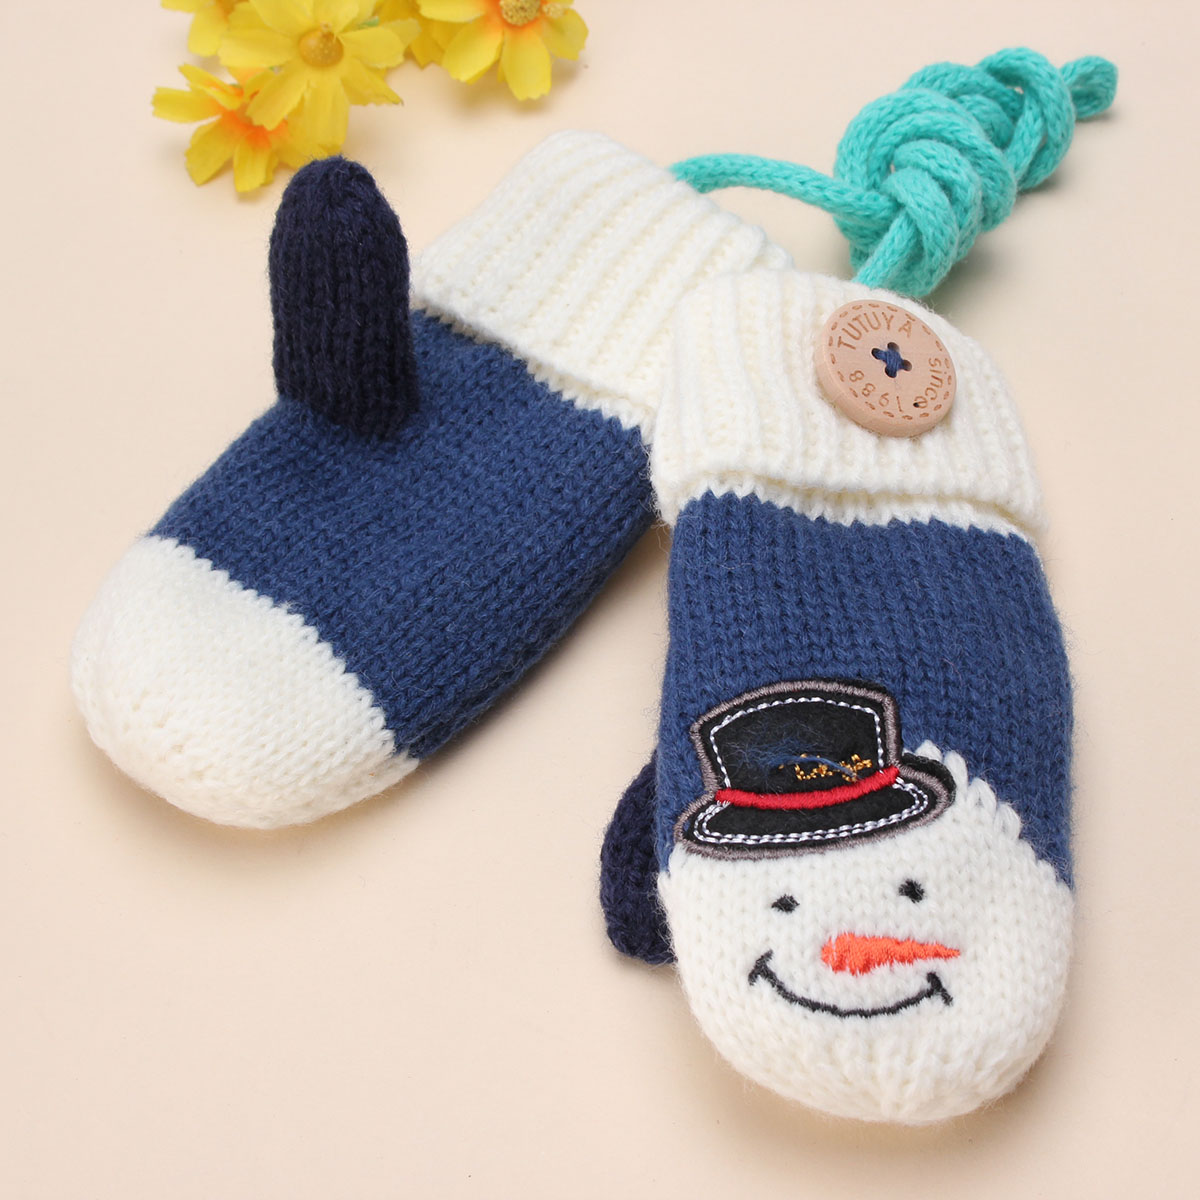 Christmas-Winter-Kids-Girl-Baby-Knitted-Warm-Mittens-Xmas-Ski-Gloves-Xmas-Gift-1019465